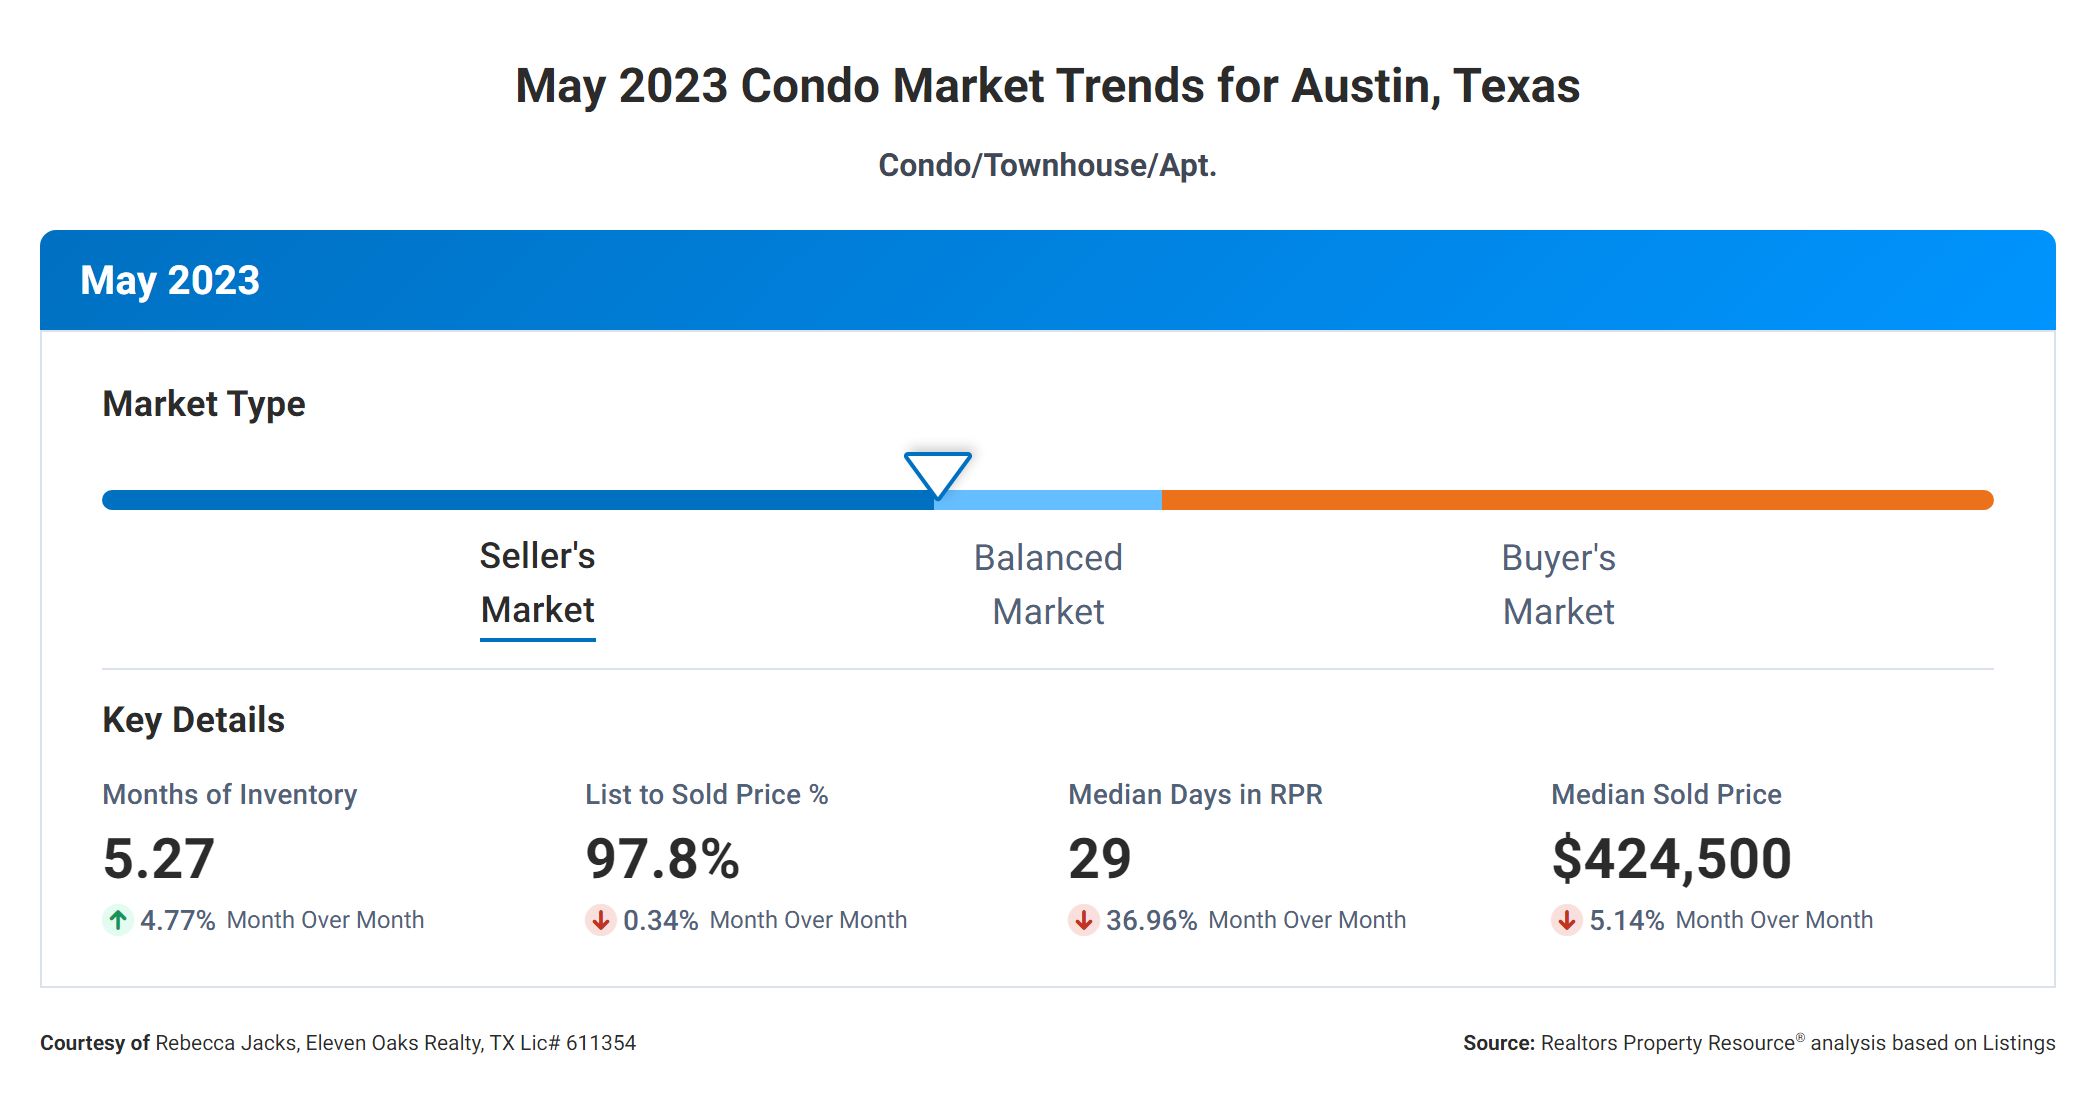 may 2023 Austin condo market is balanced